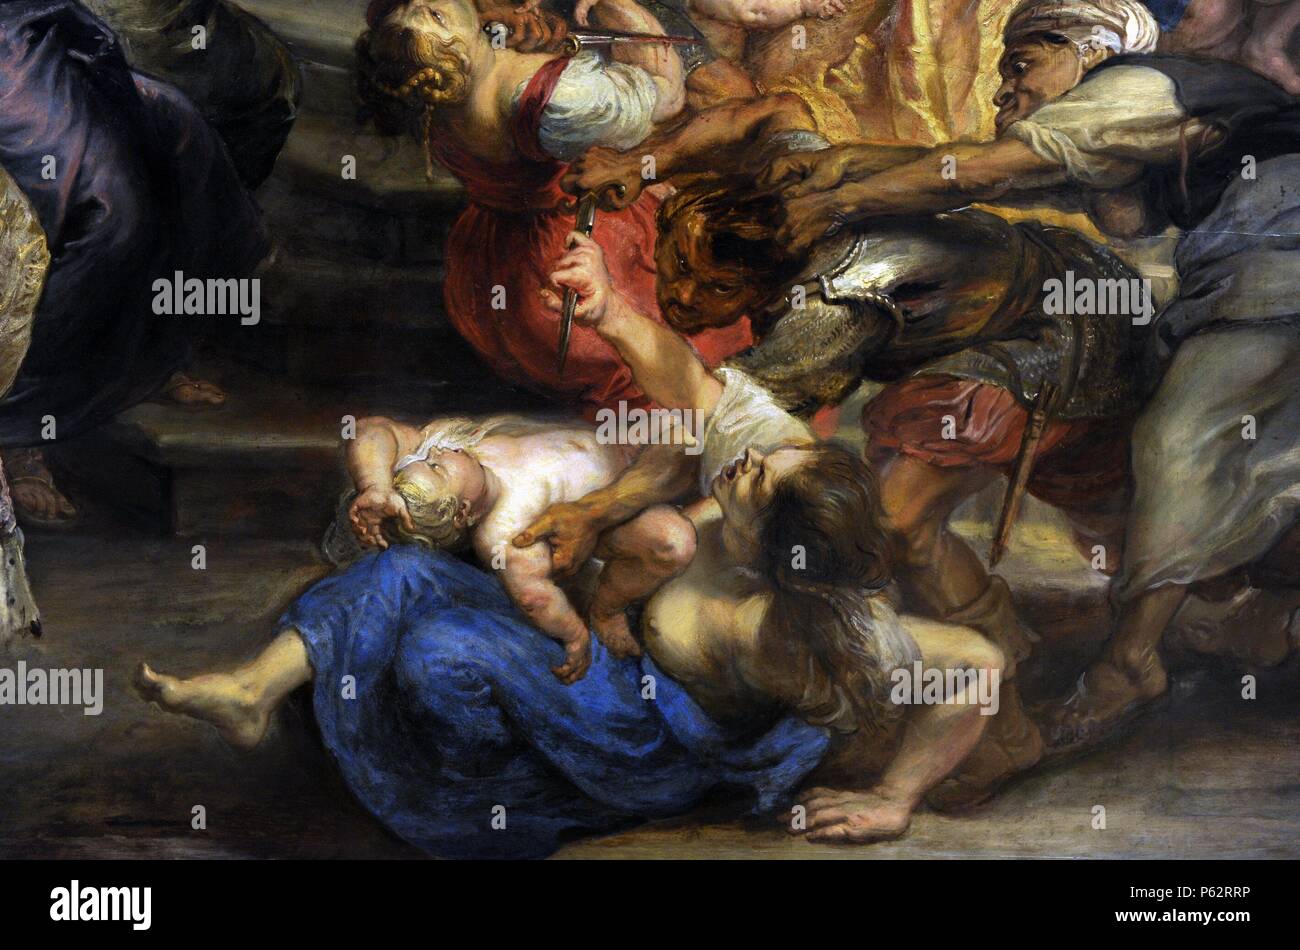 Peter Paul Rubens (1577-1640). German-born Flemish Baroque painter. Massacre of the Innocents, 1635-40. Version Pinakothek. Detail. Munich. Germany. Stock Photo